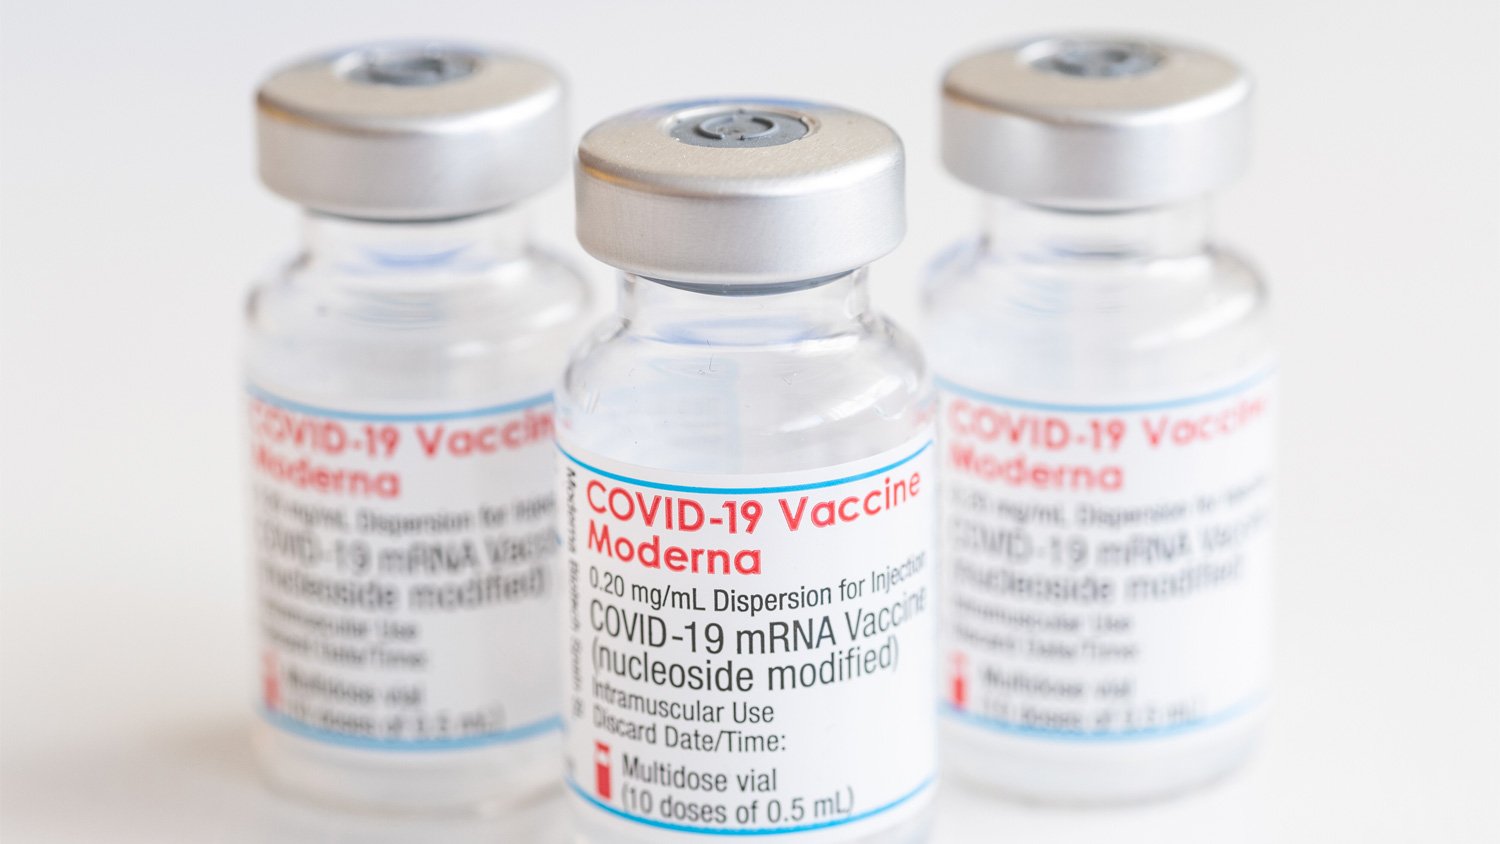 Three glass vaccine vials labelled COVID-19 Vaccine Moderna.